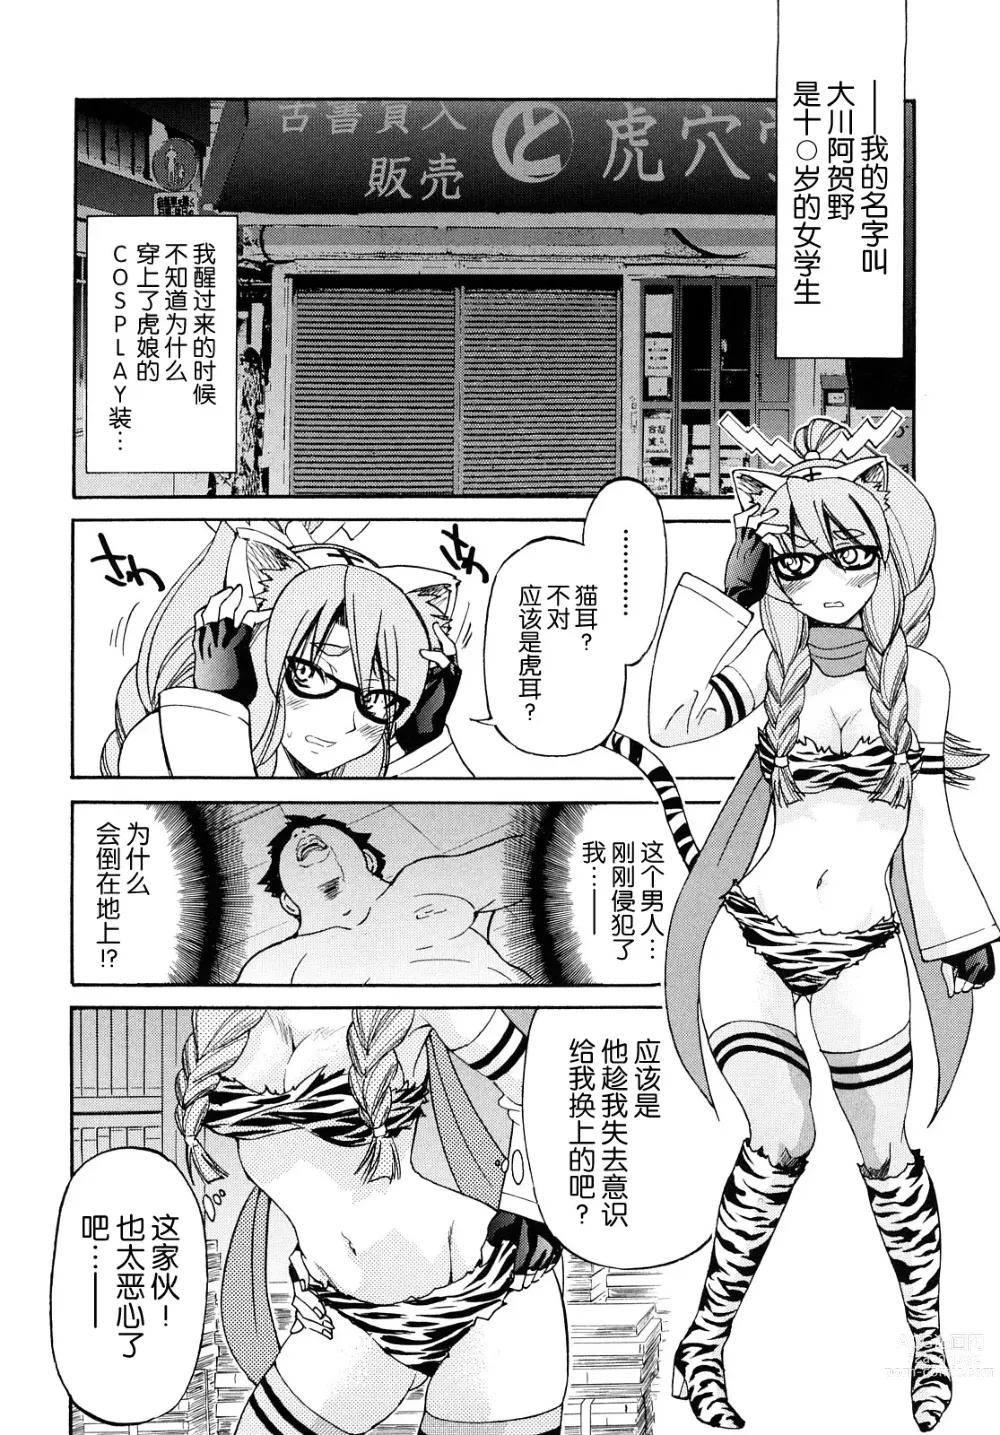 Page 31 of manga Shibarare Hime